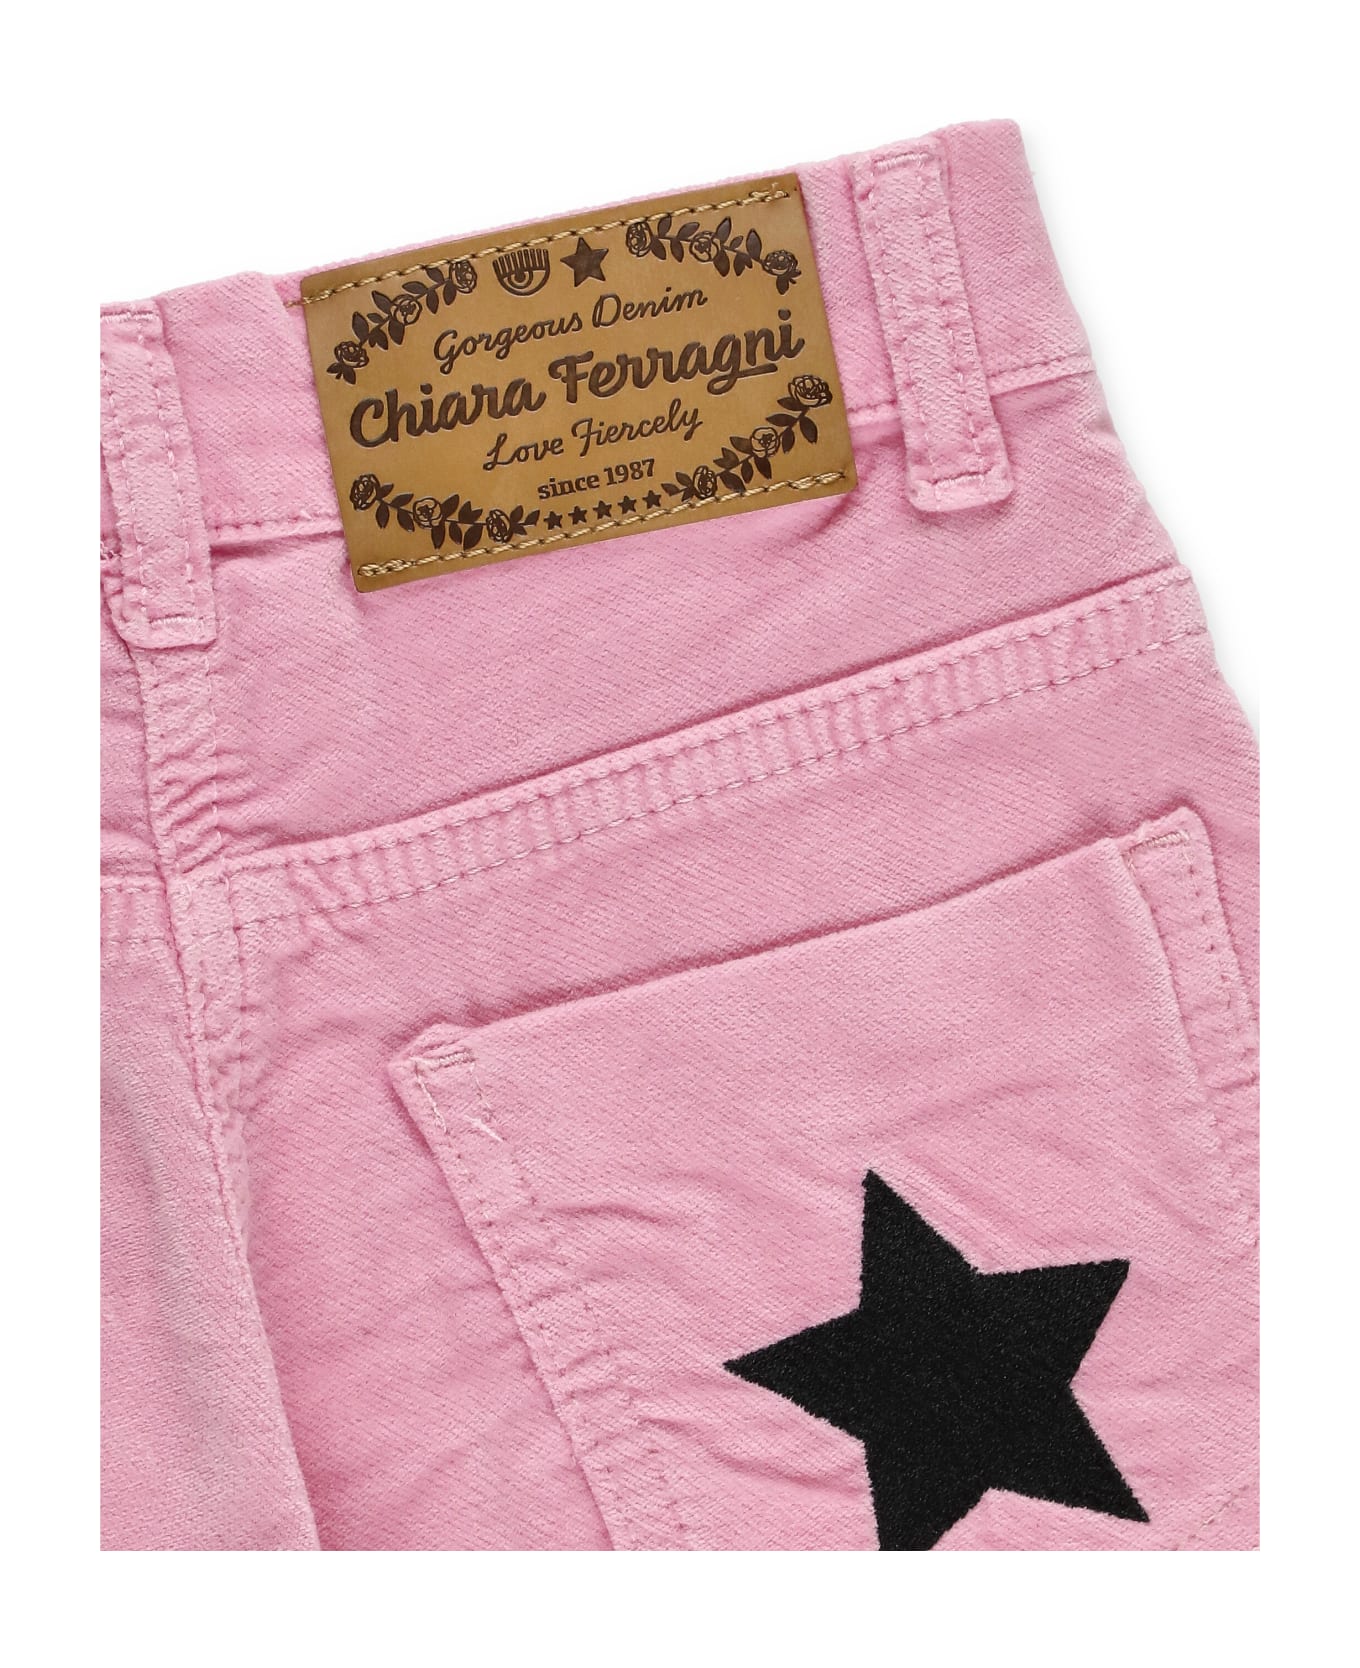 Chiara Ferragni Cotton Shorts - Pink